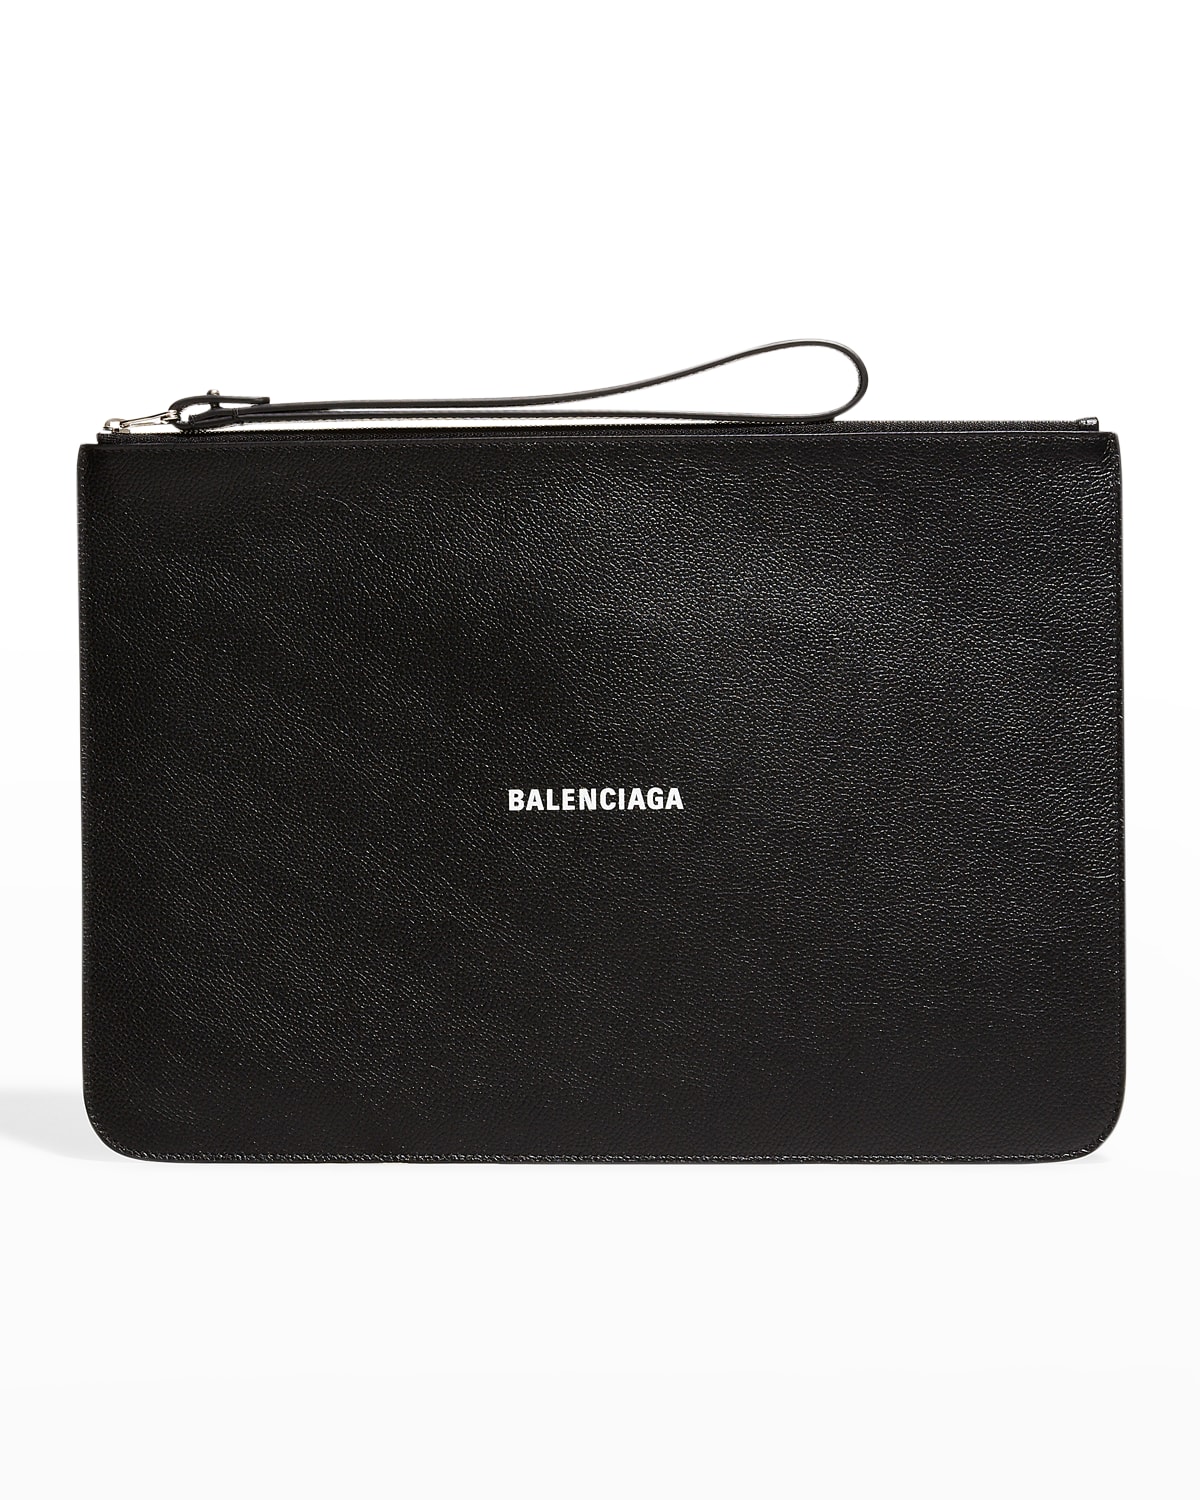 Balenciaga Zip Leather Pouch Clutch Bag